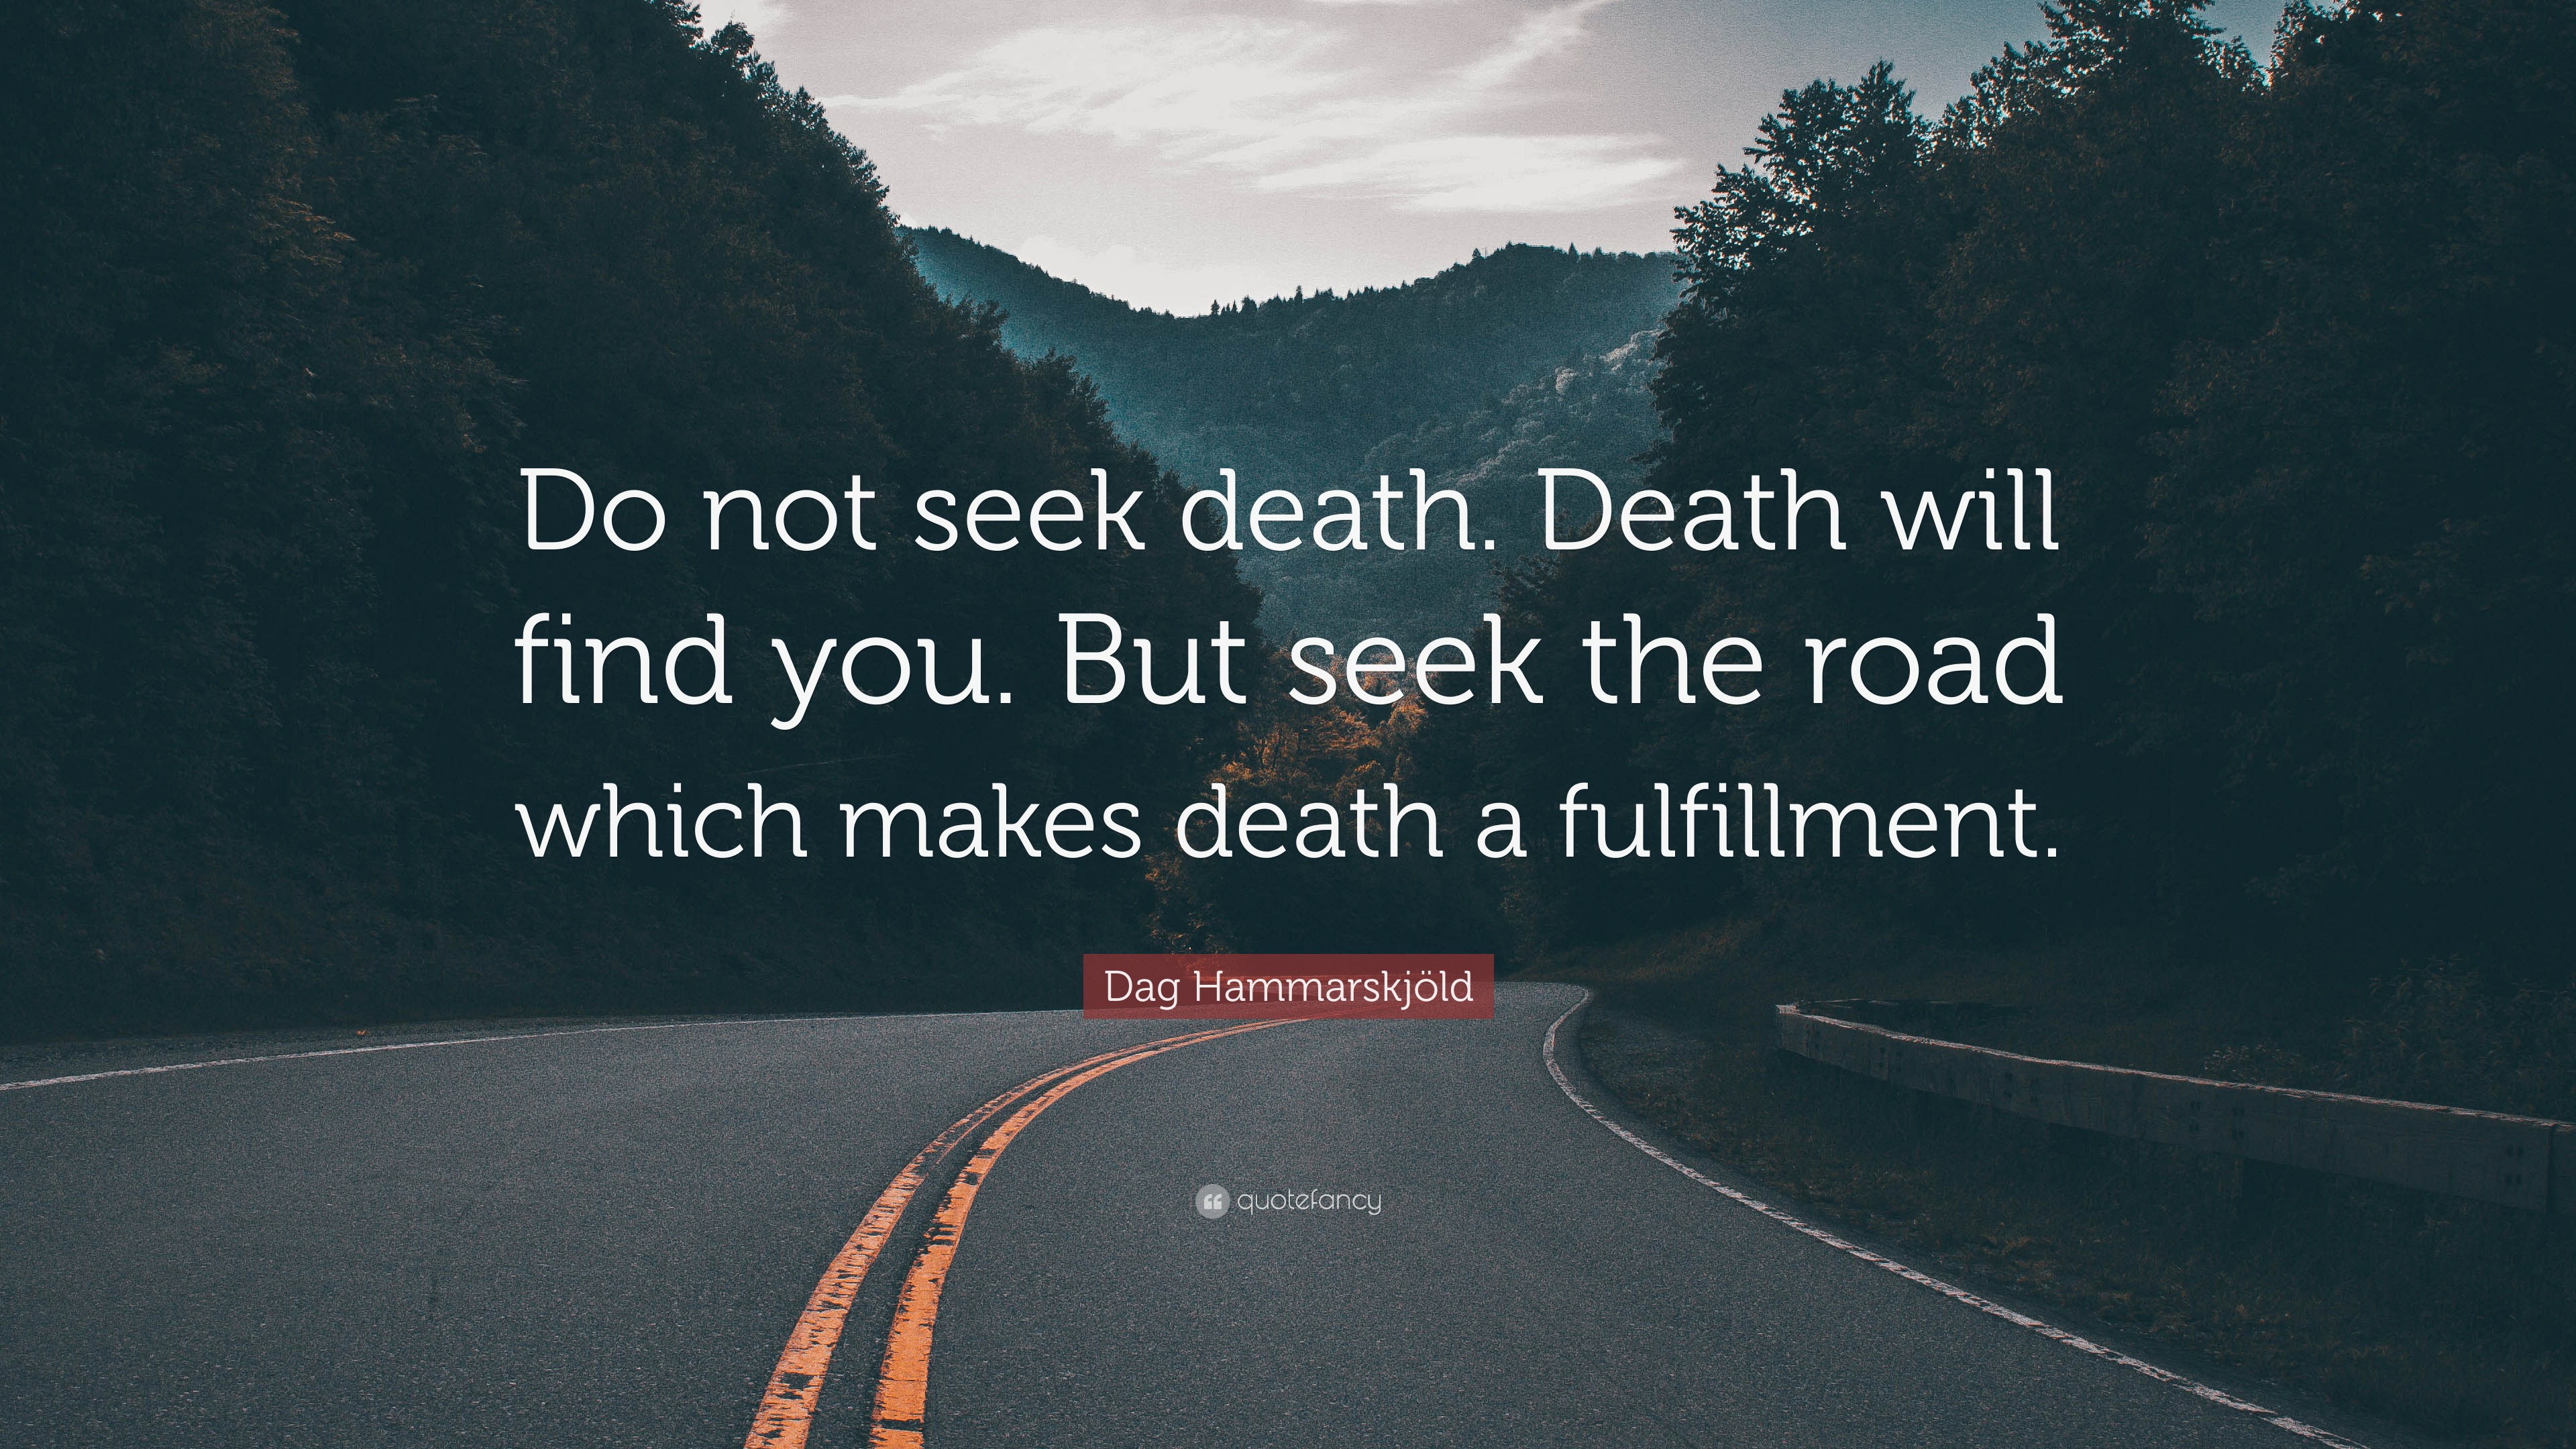 Dag Hammarskjold Quote Do Not Seek Death Death Will Find You But Seek The Road Which